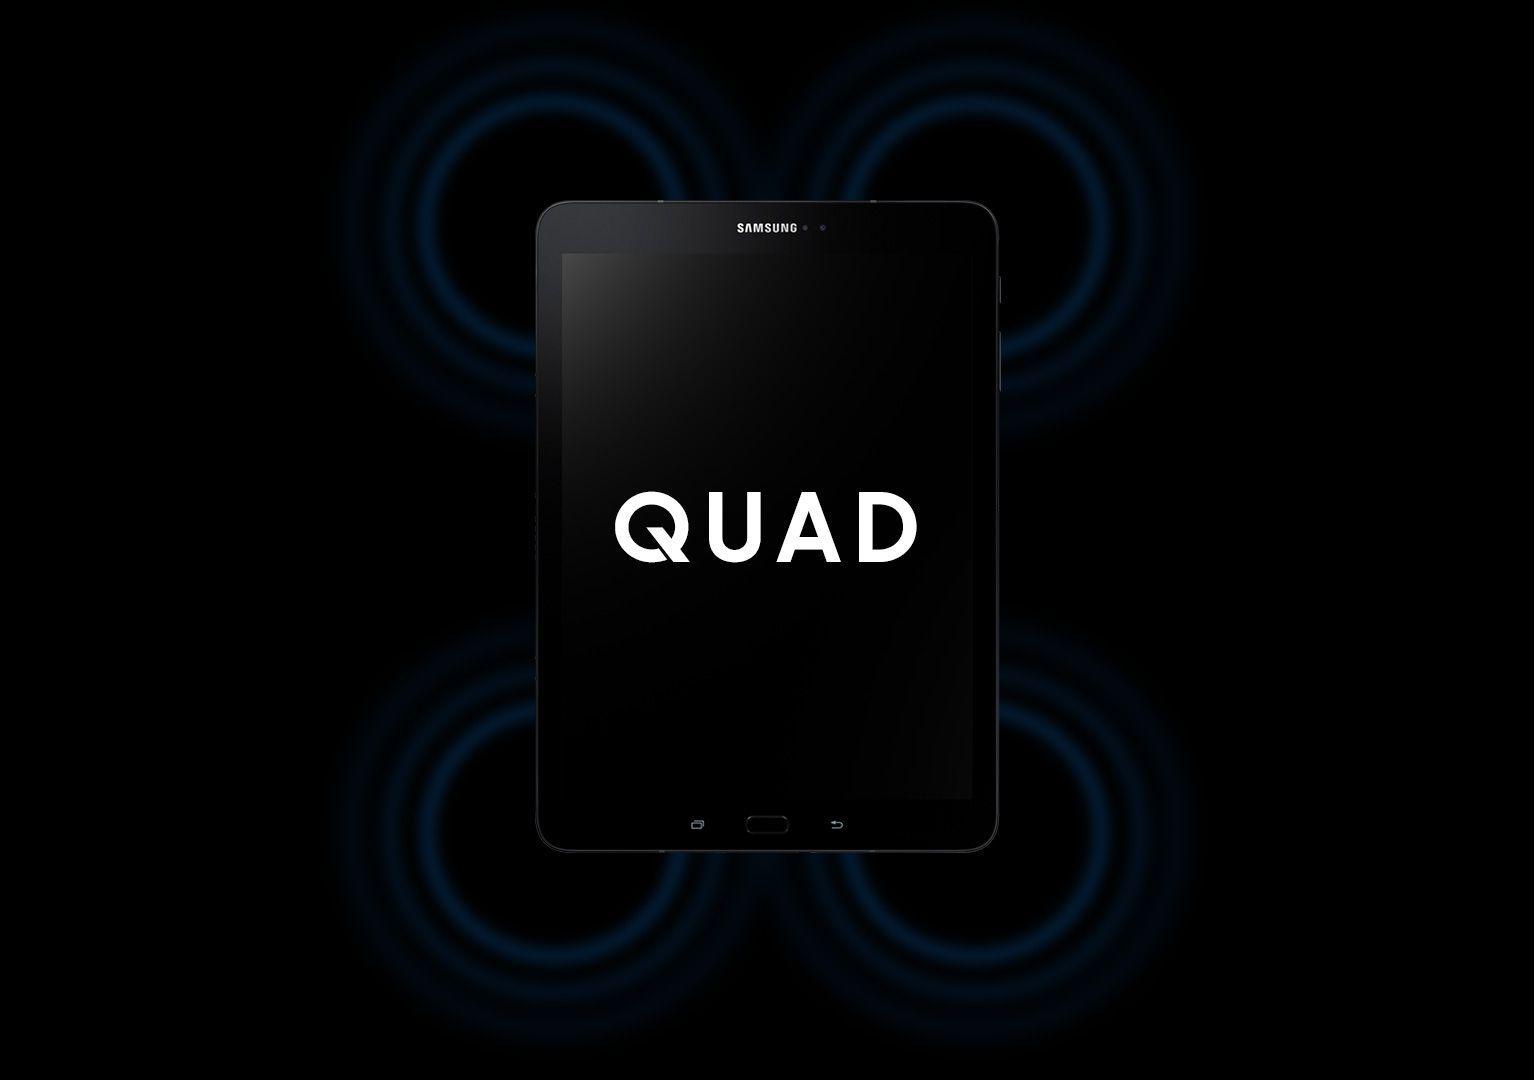 Samsung Galaxy Tab Logo - Samsung Galaxy Tab S3 4G. HDR Tablet with S Pen